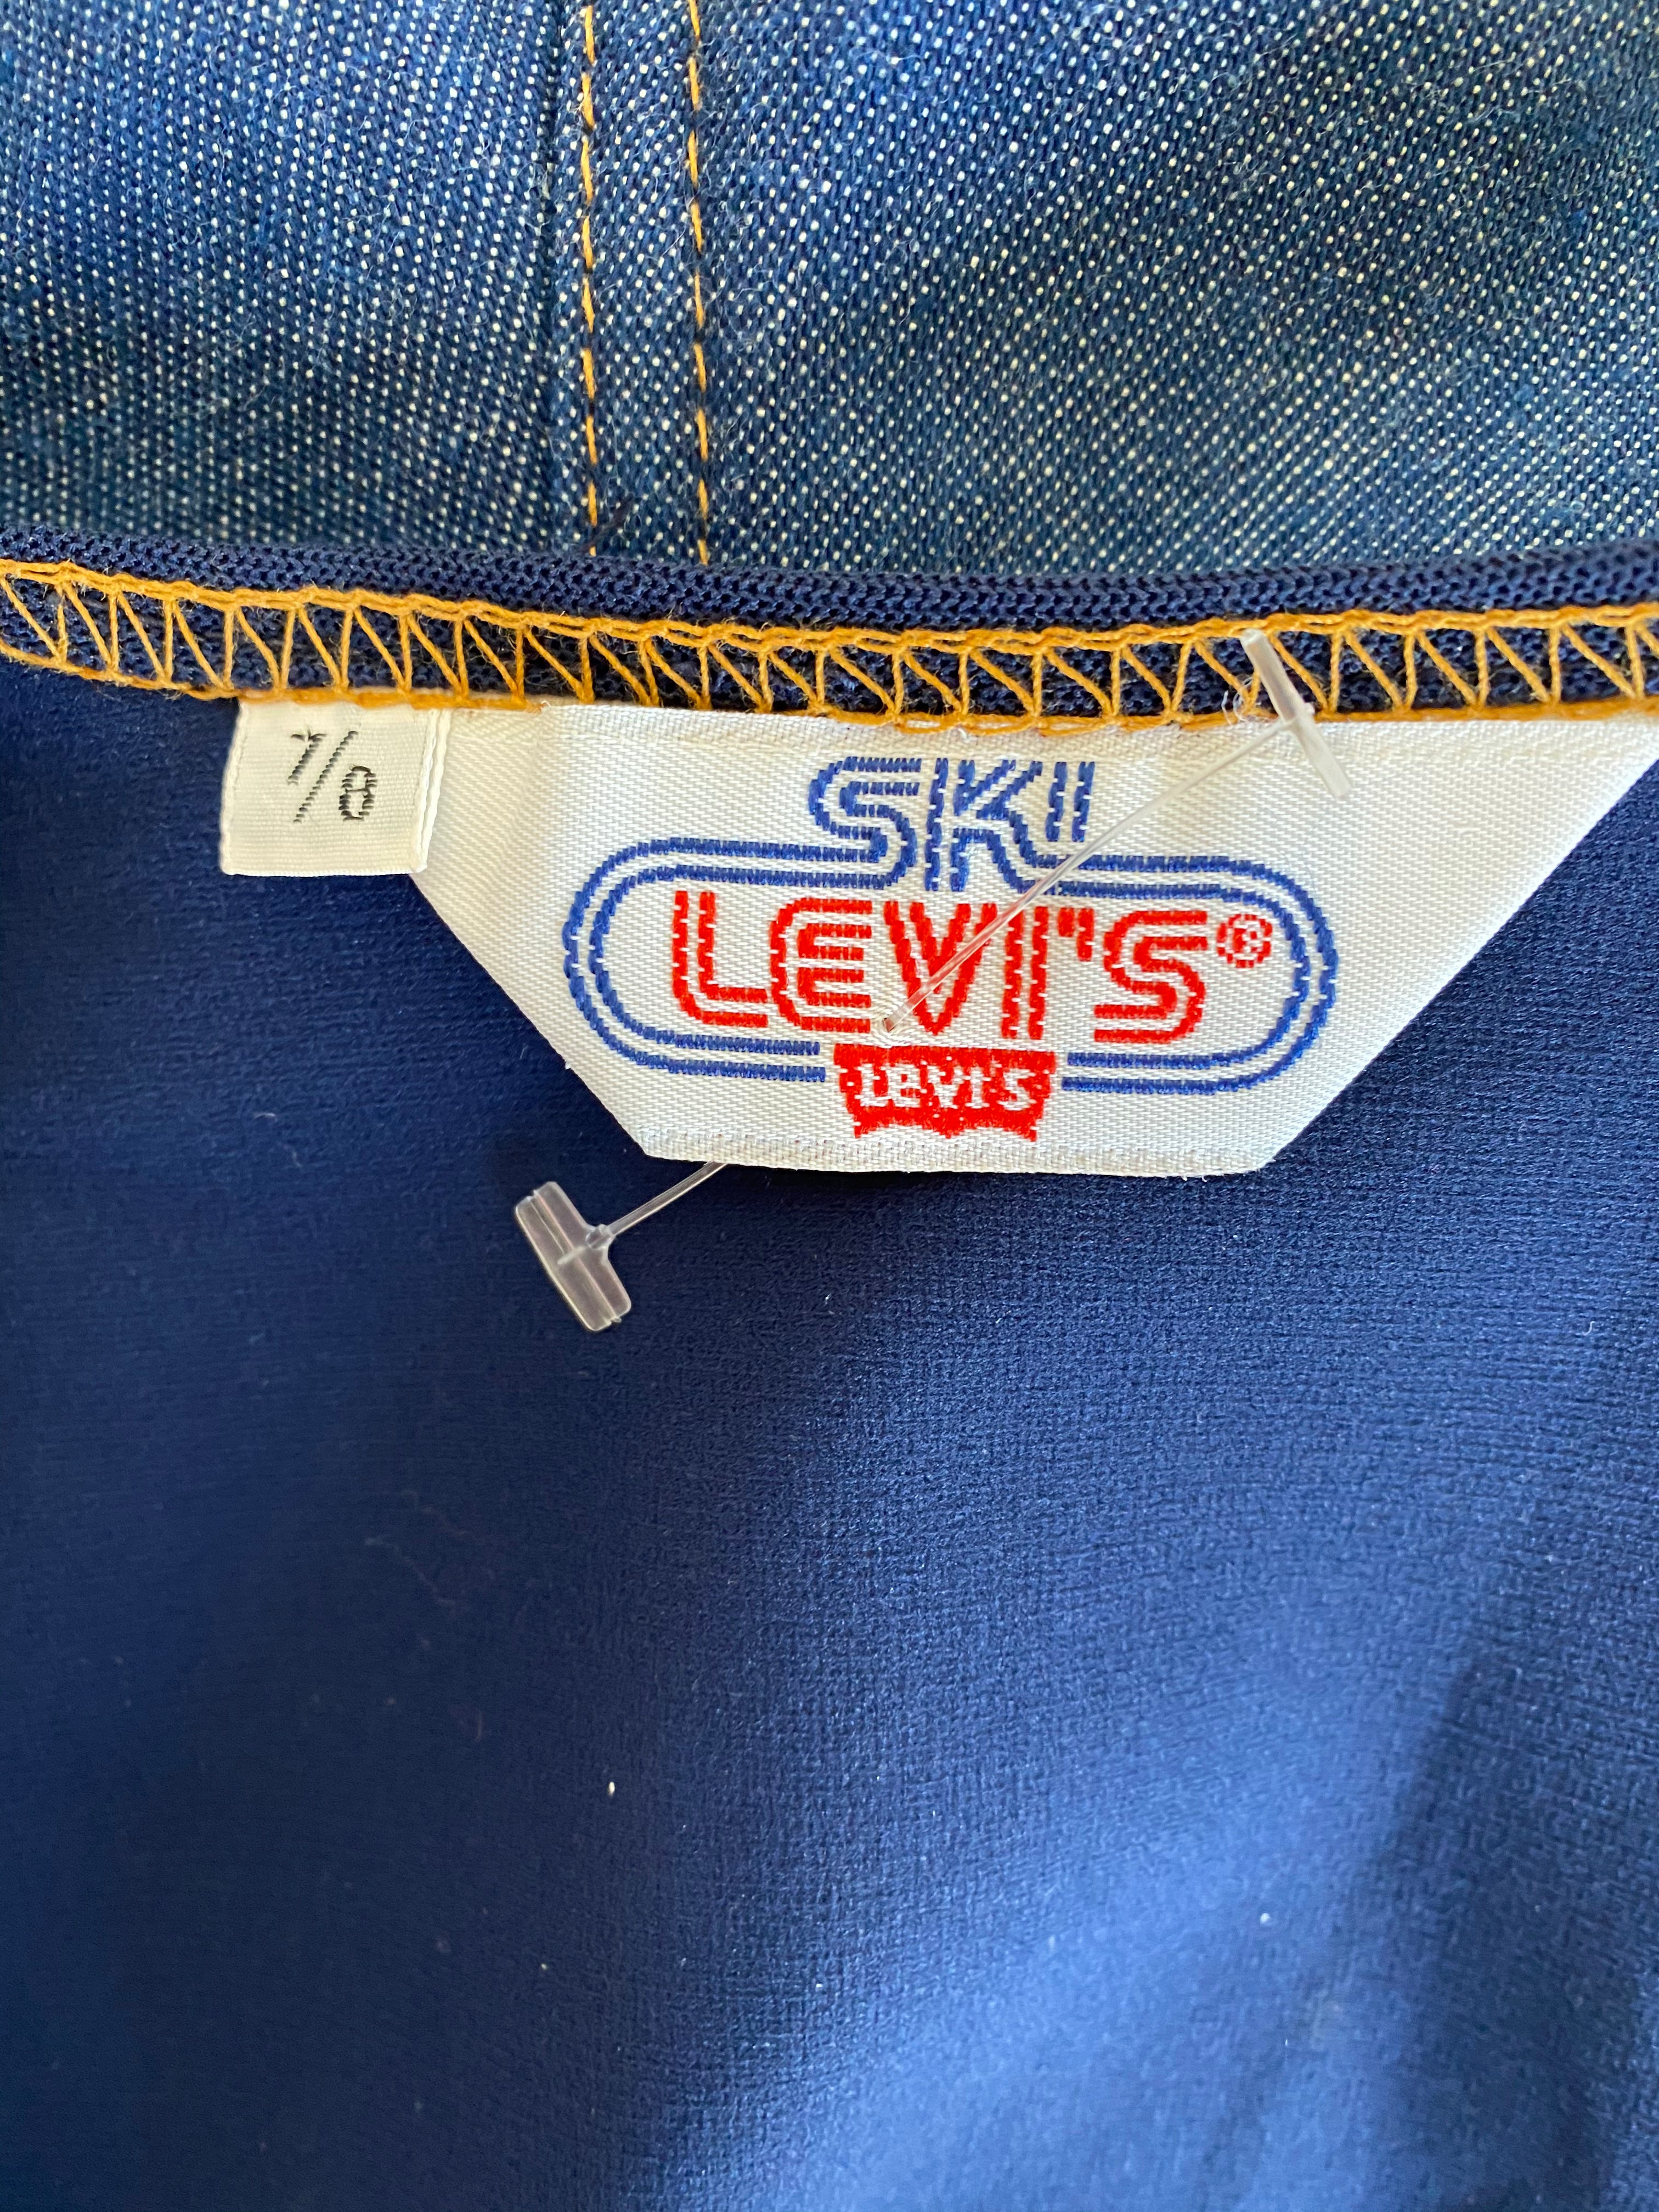 Vintage Levi's Blue Denim Snow Overalls, label